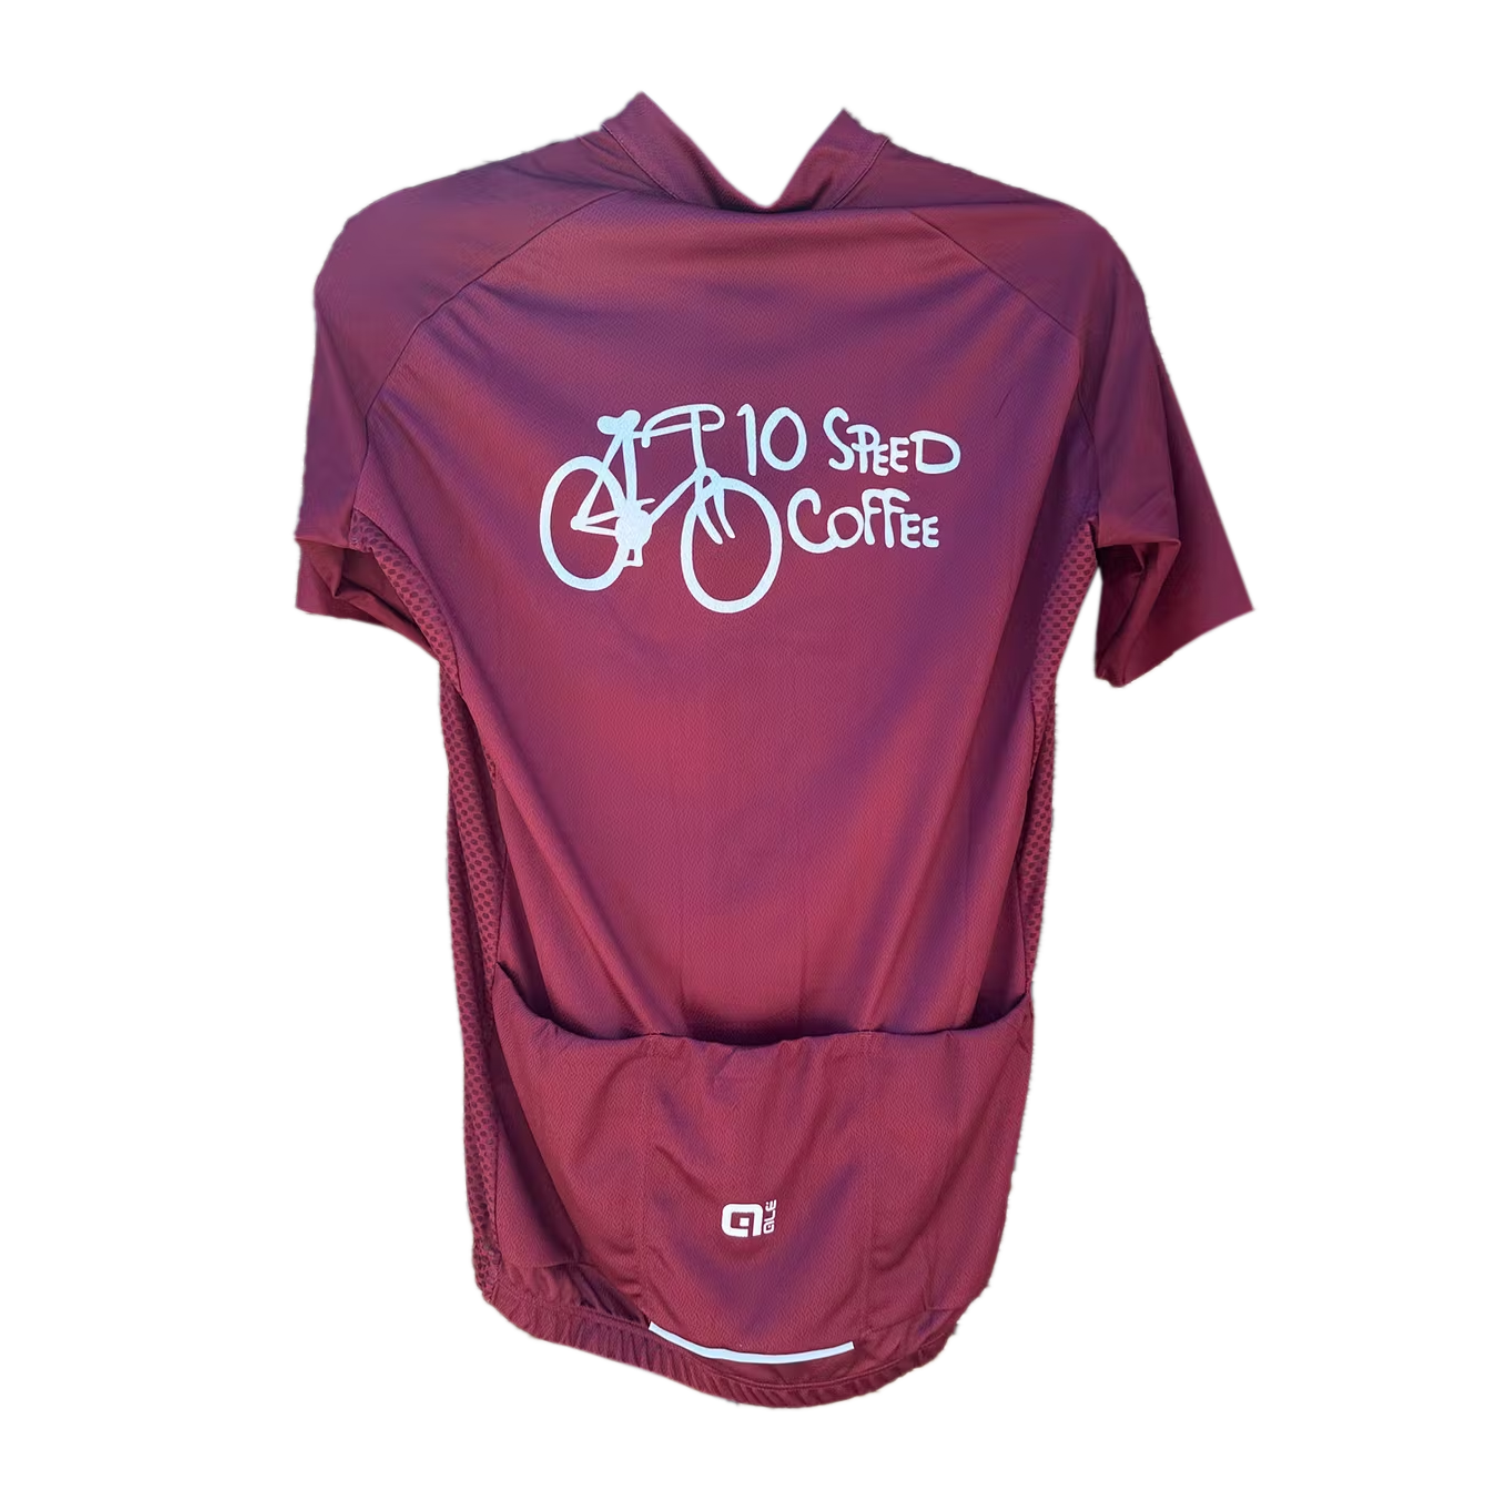 Biker shirt with 10 Speed Coffee logo